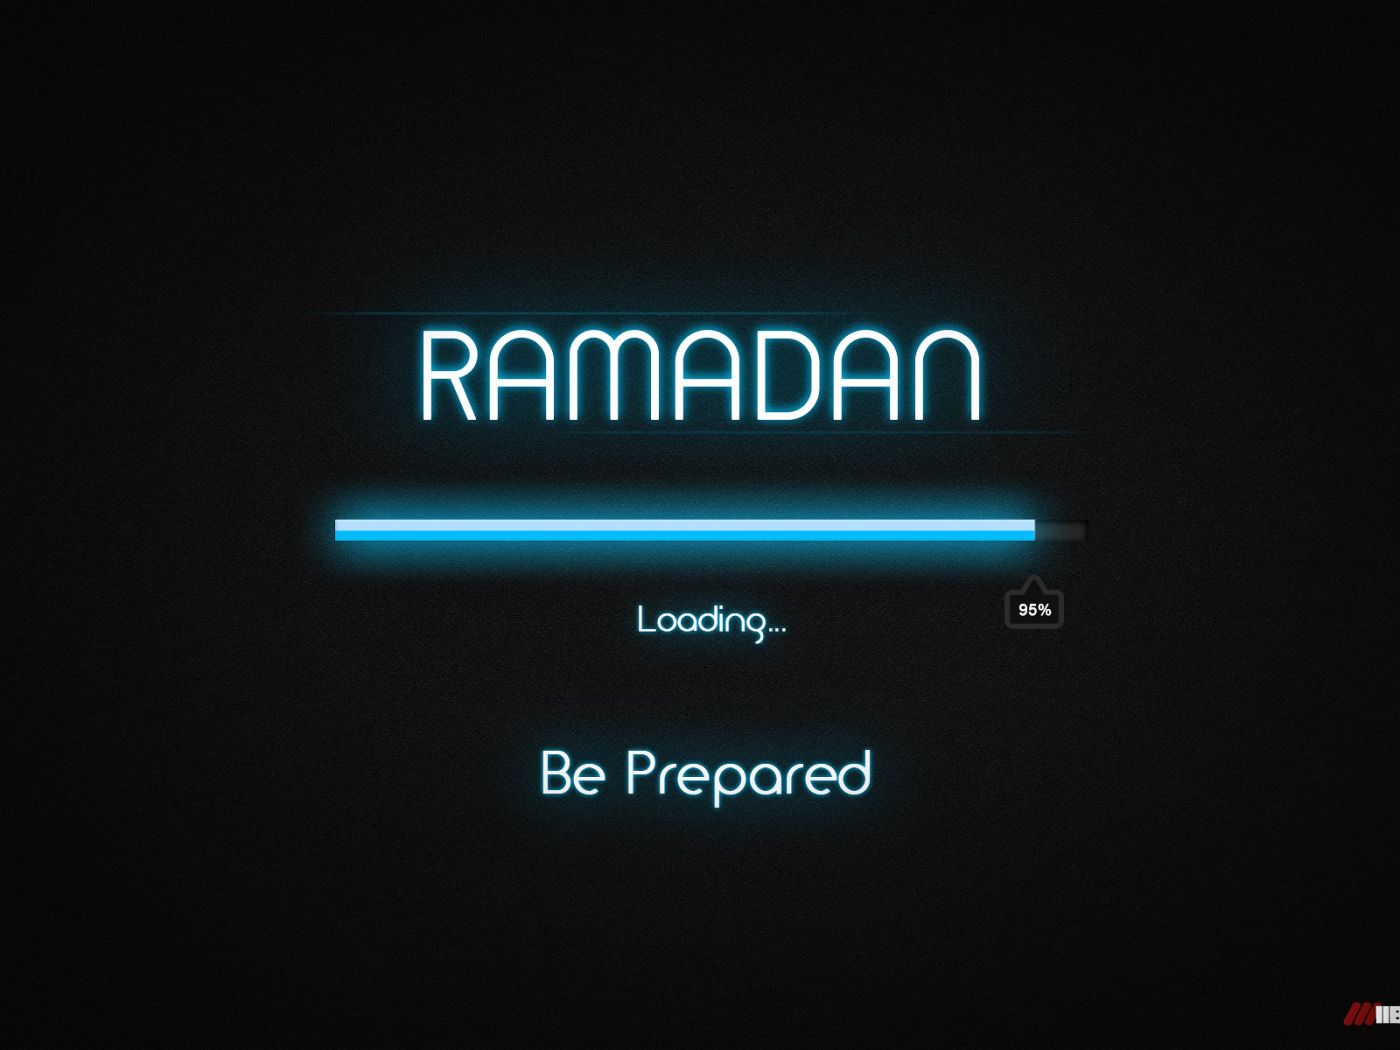 Ramadan loading